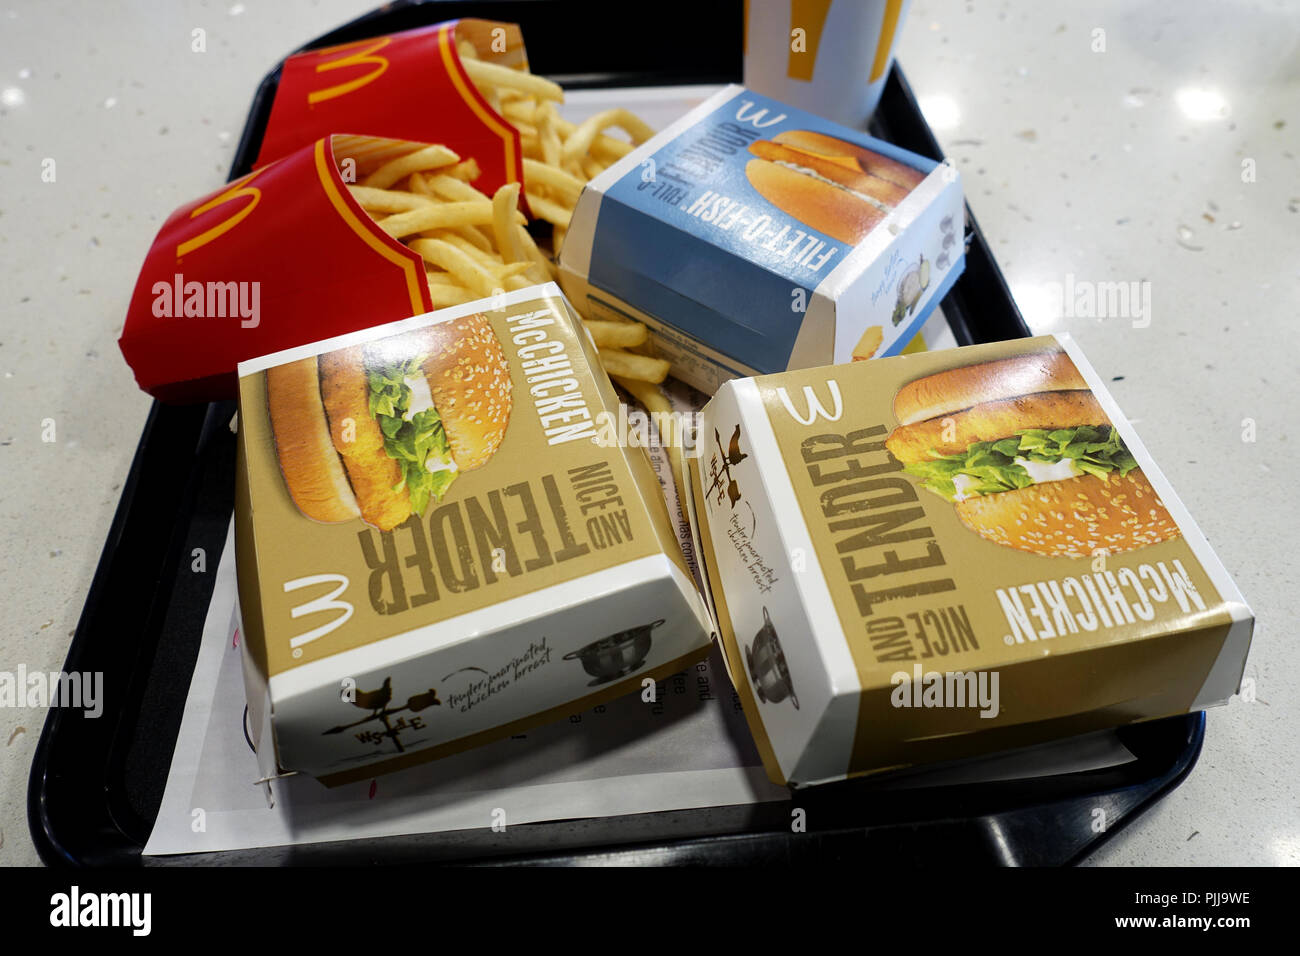 Australian McDonald's burgers and fries on a tray Stock Photo